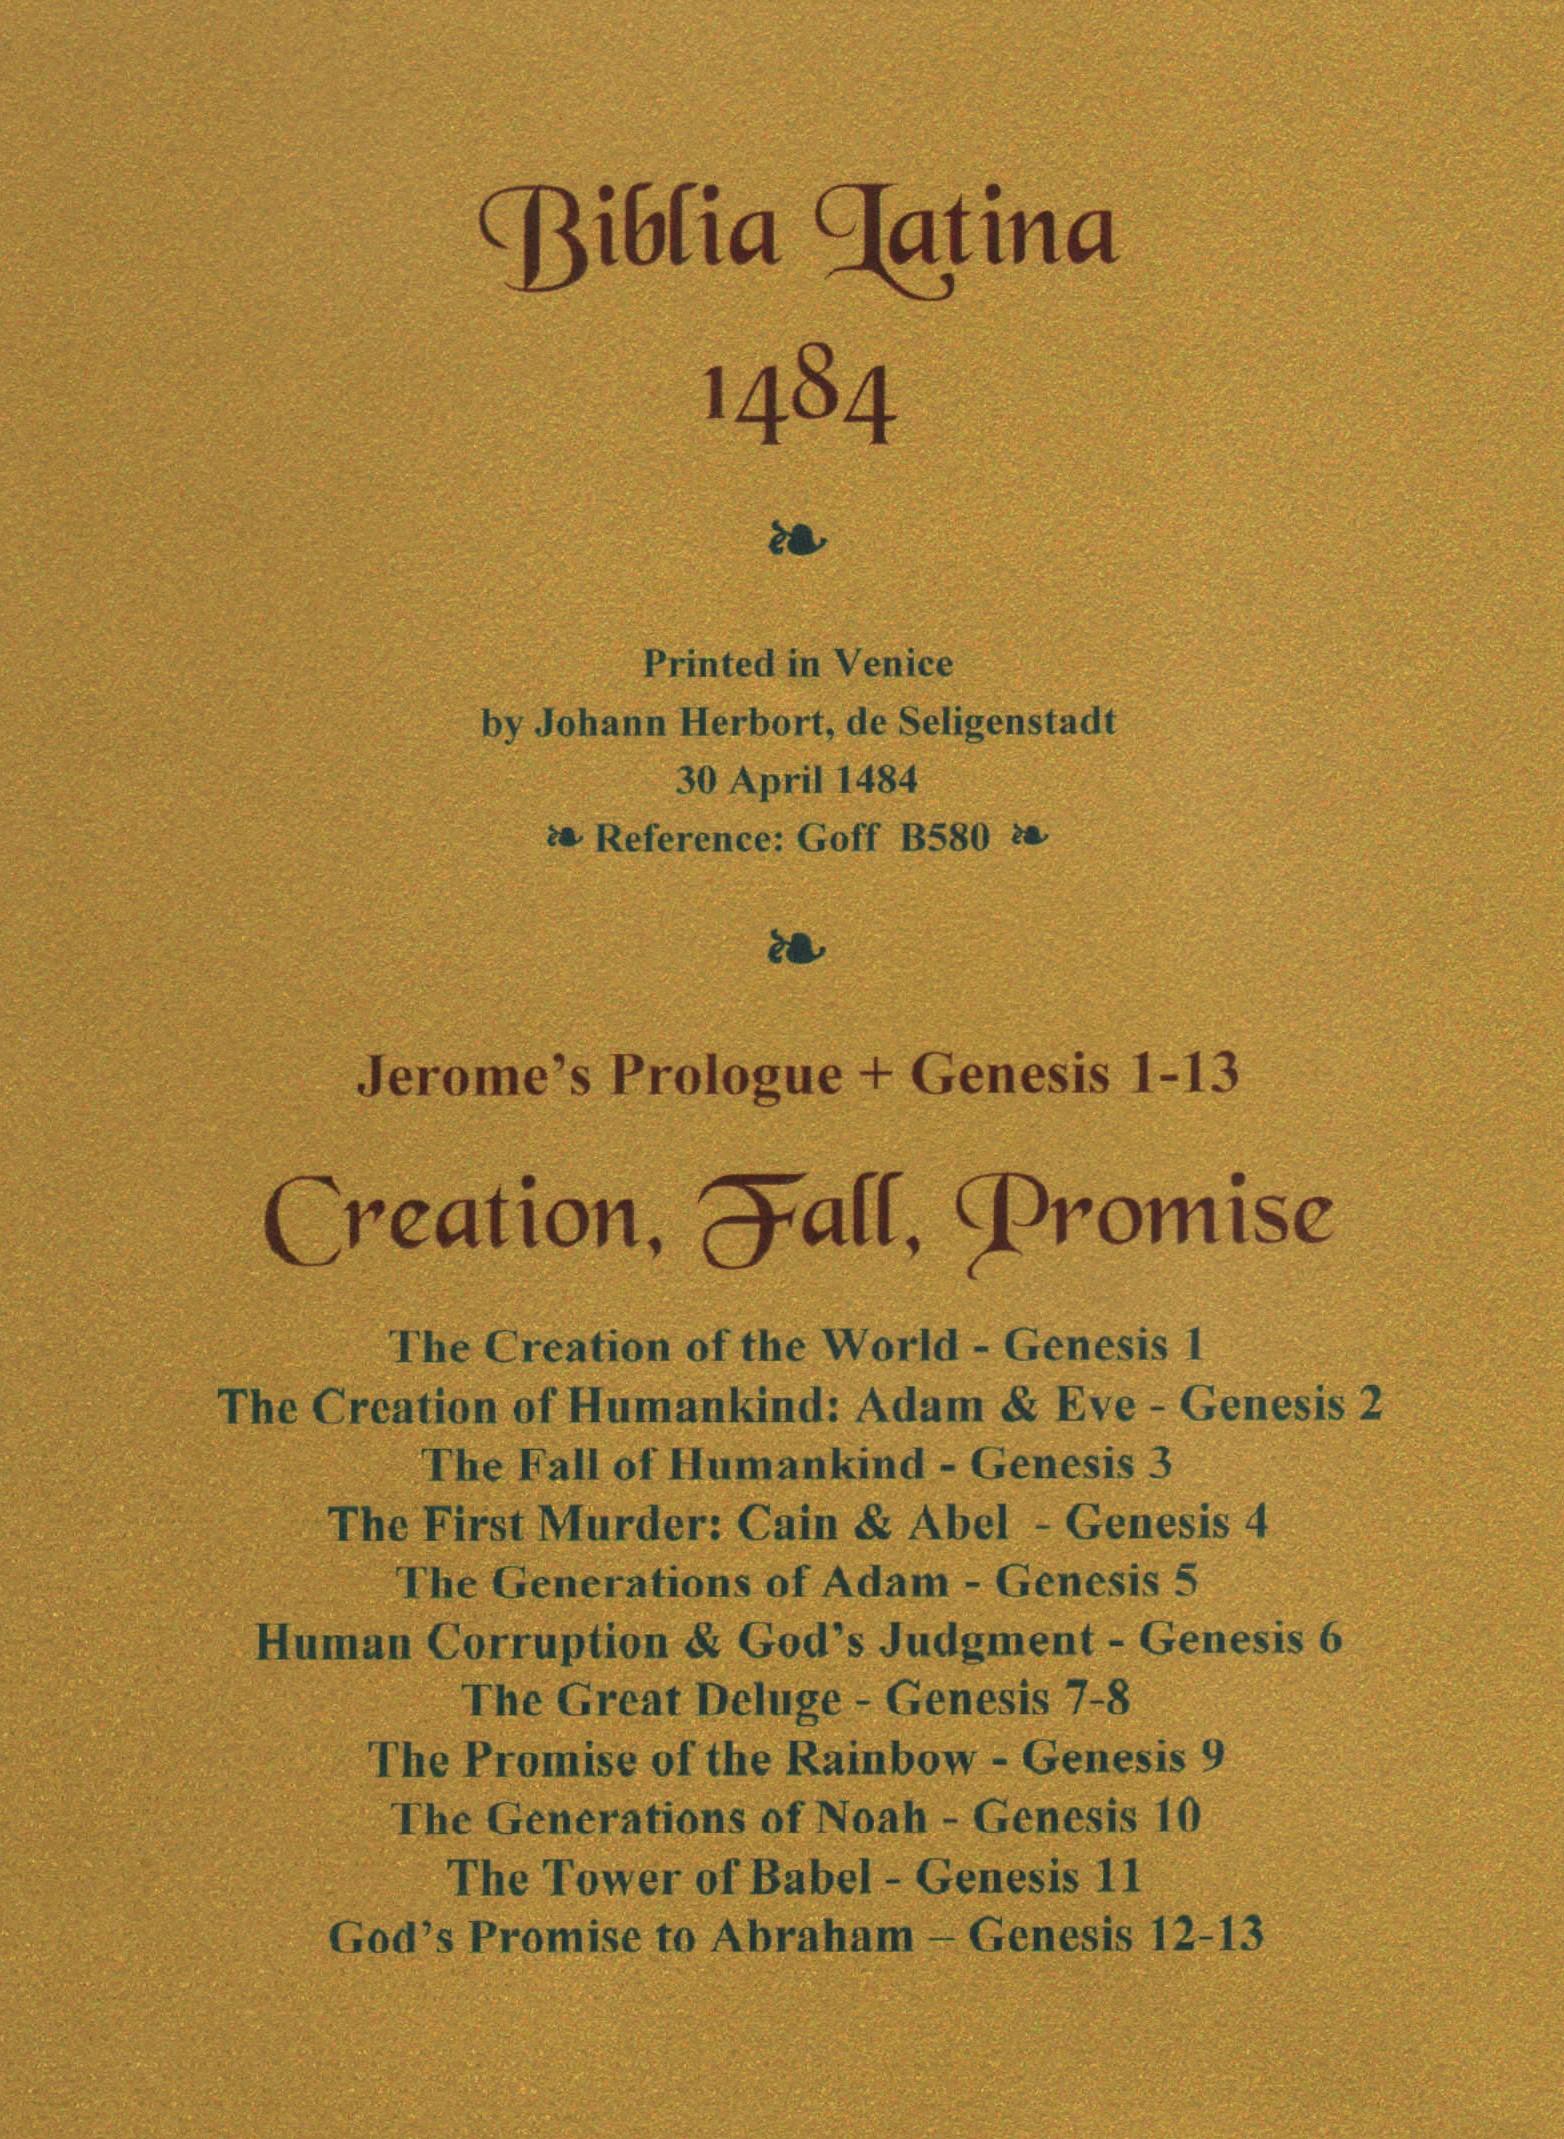 Medieval Genesis Beginnings, Super-Portfolio, Four-Leaf Set from a 1484 Latin Bible For Sale